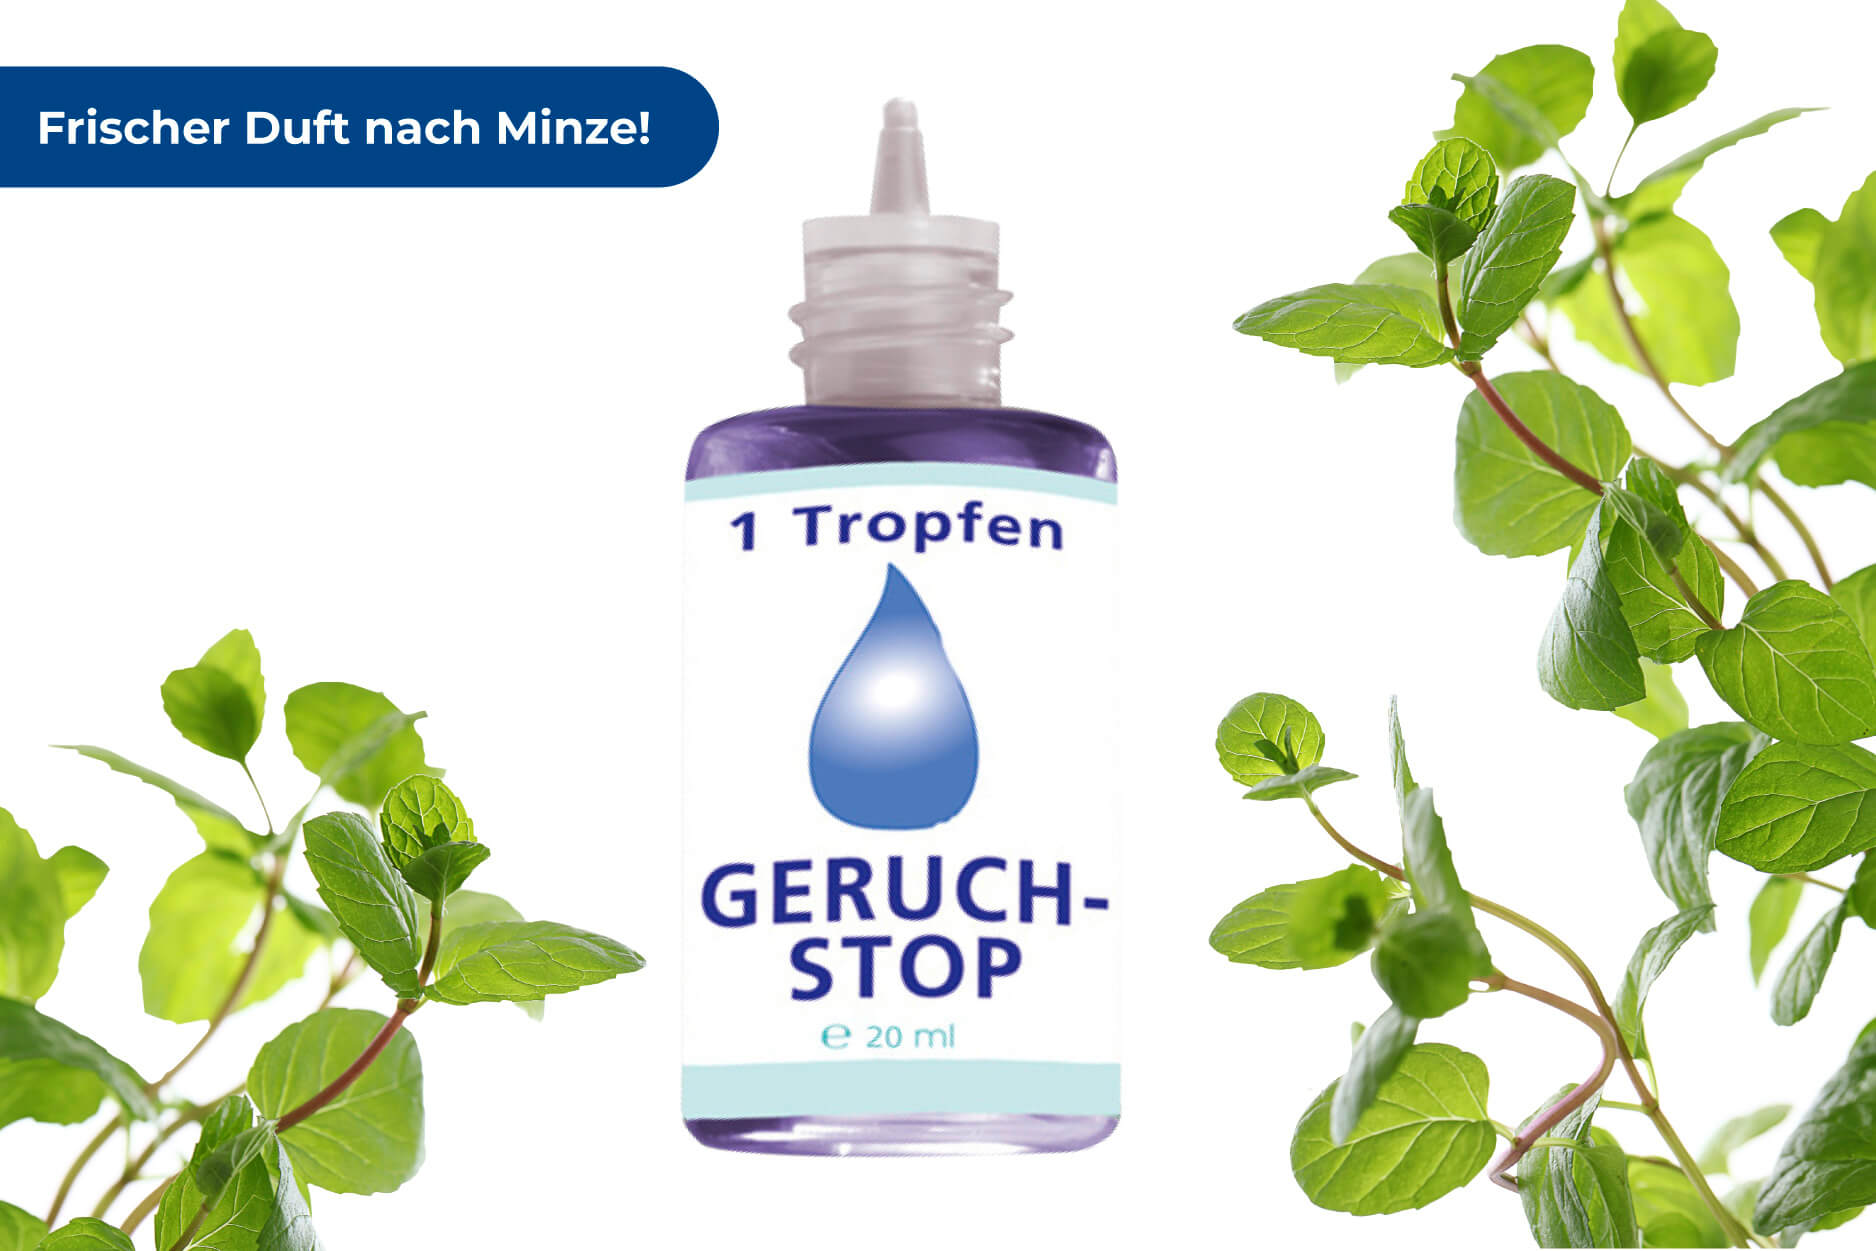 1-Tropfen Geruch-STOP, 20 ml